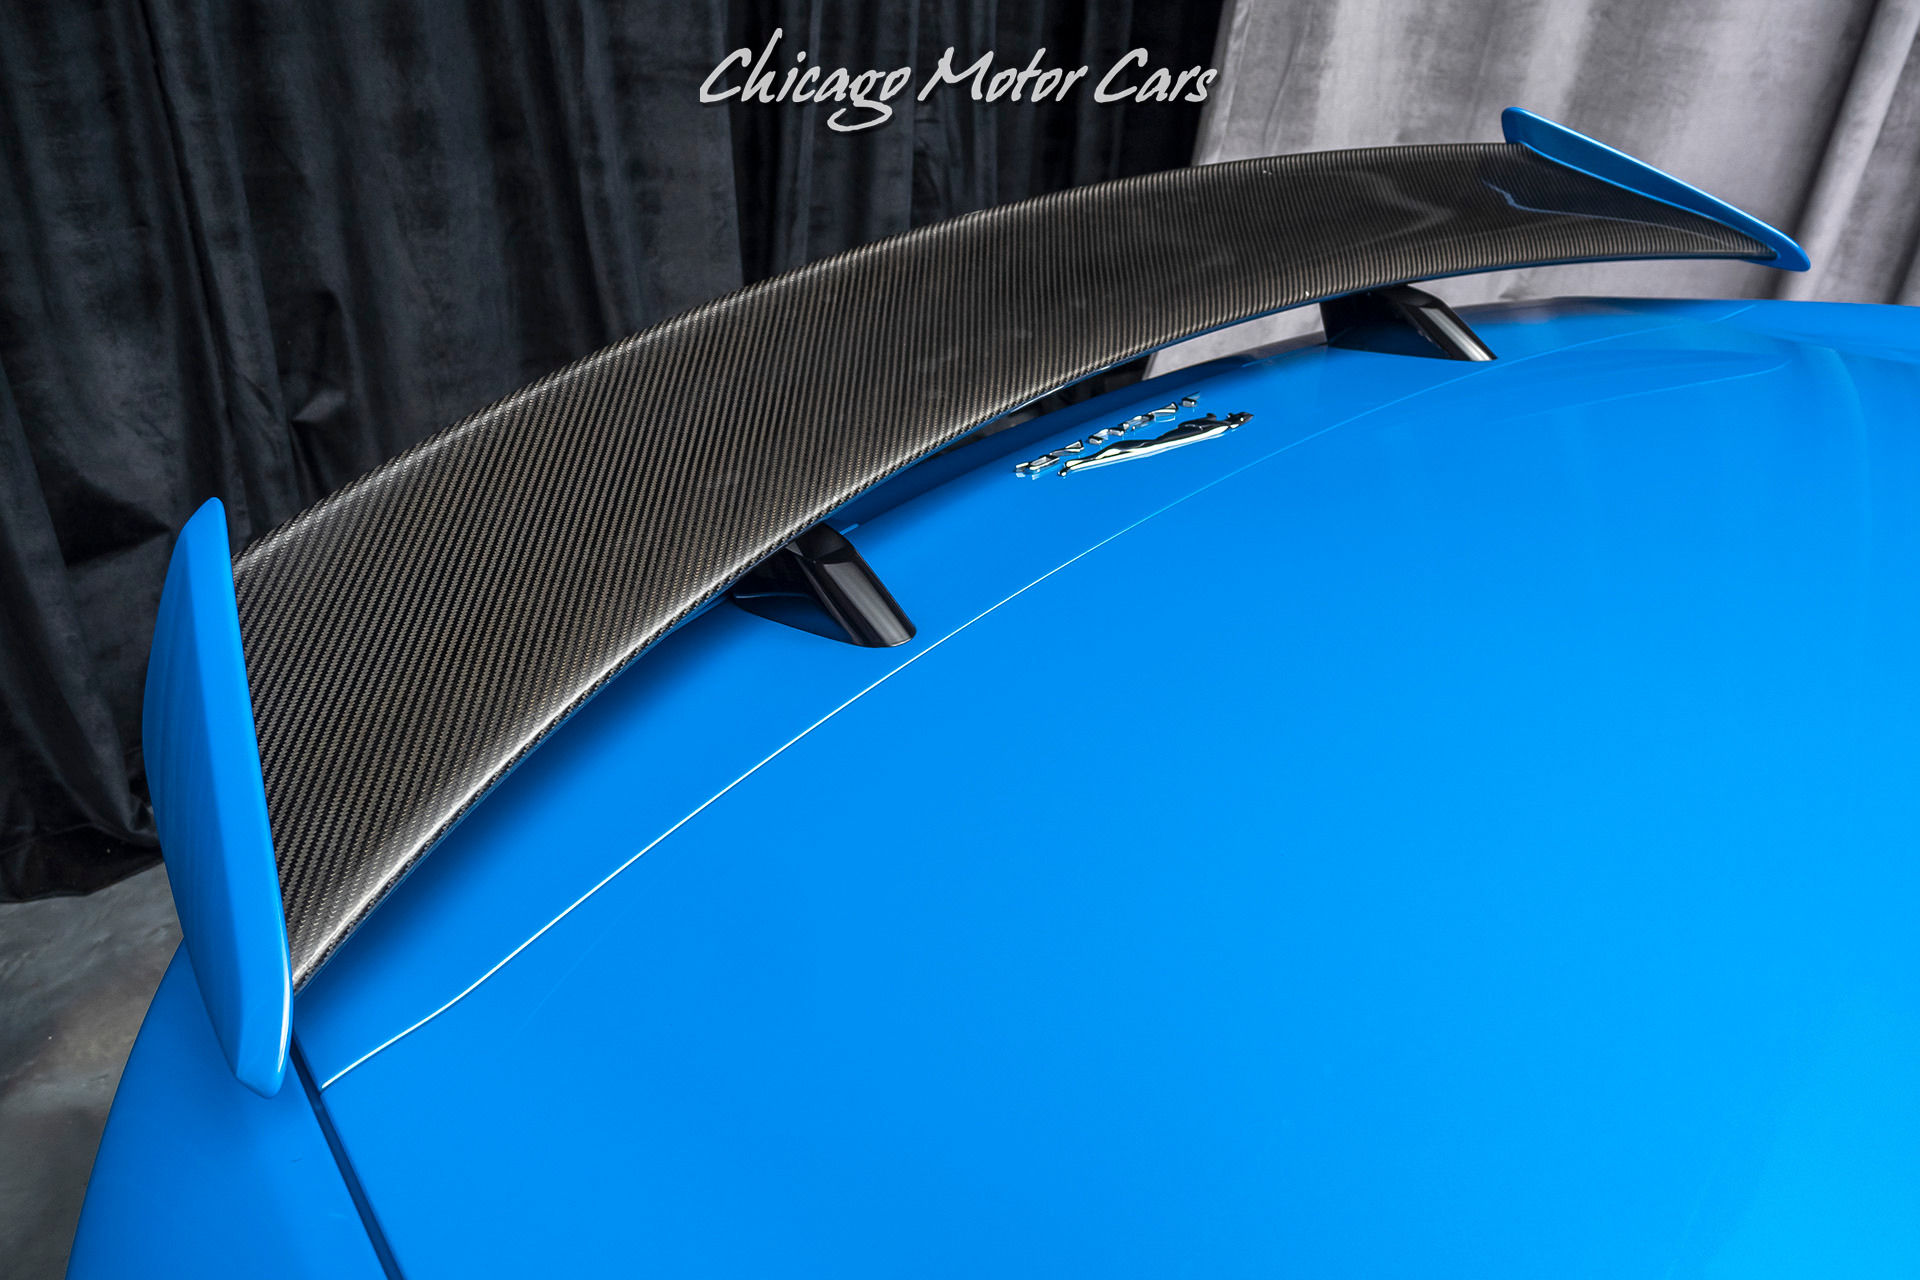 Used-2017-Jaguar-F-TYPE-SVR-Carbon-Fiber-Package-RARE-Ultra-Blue-Paint-Loaded